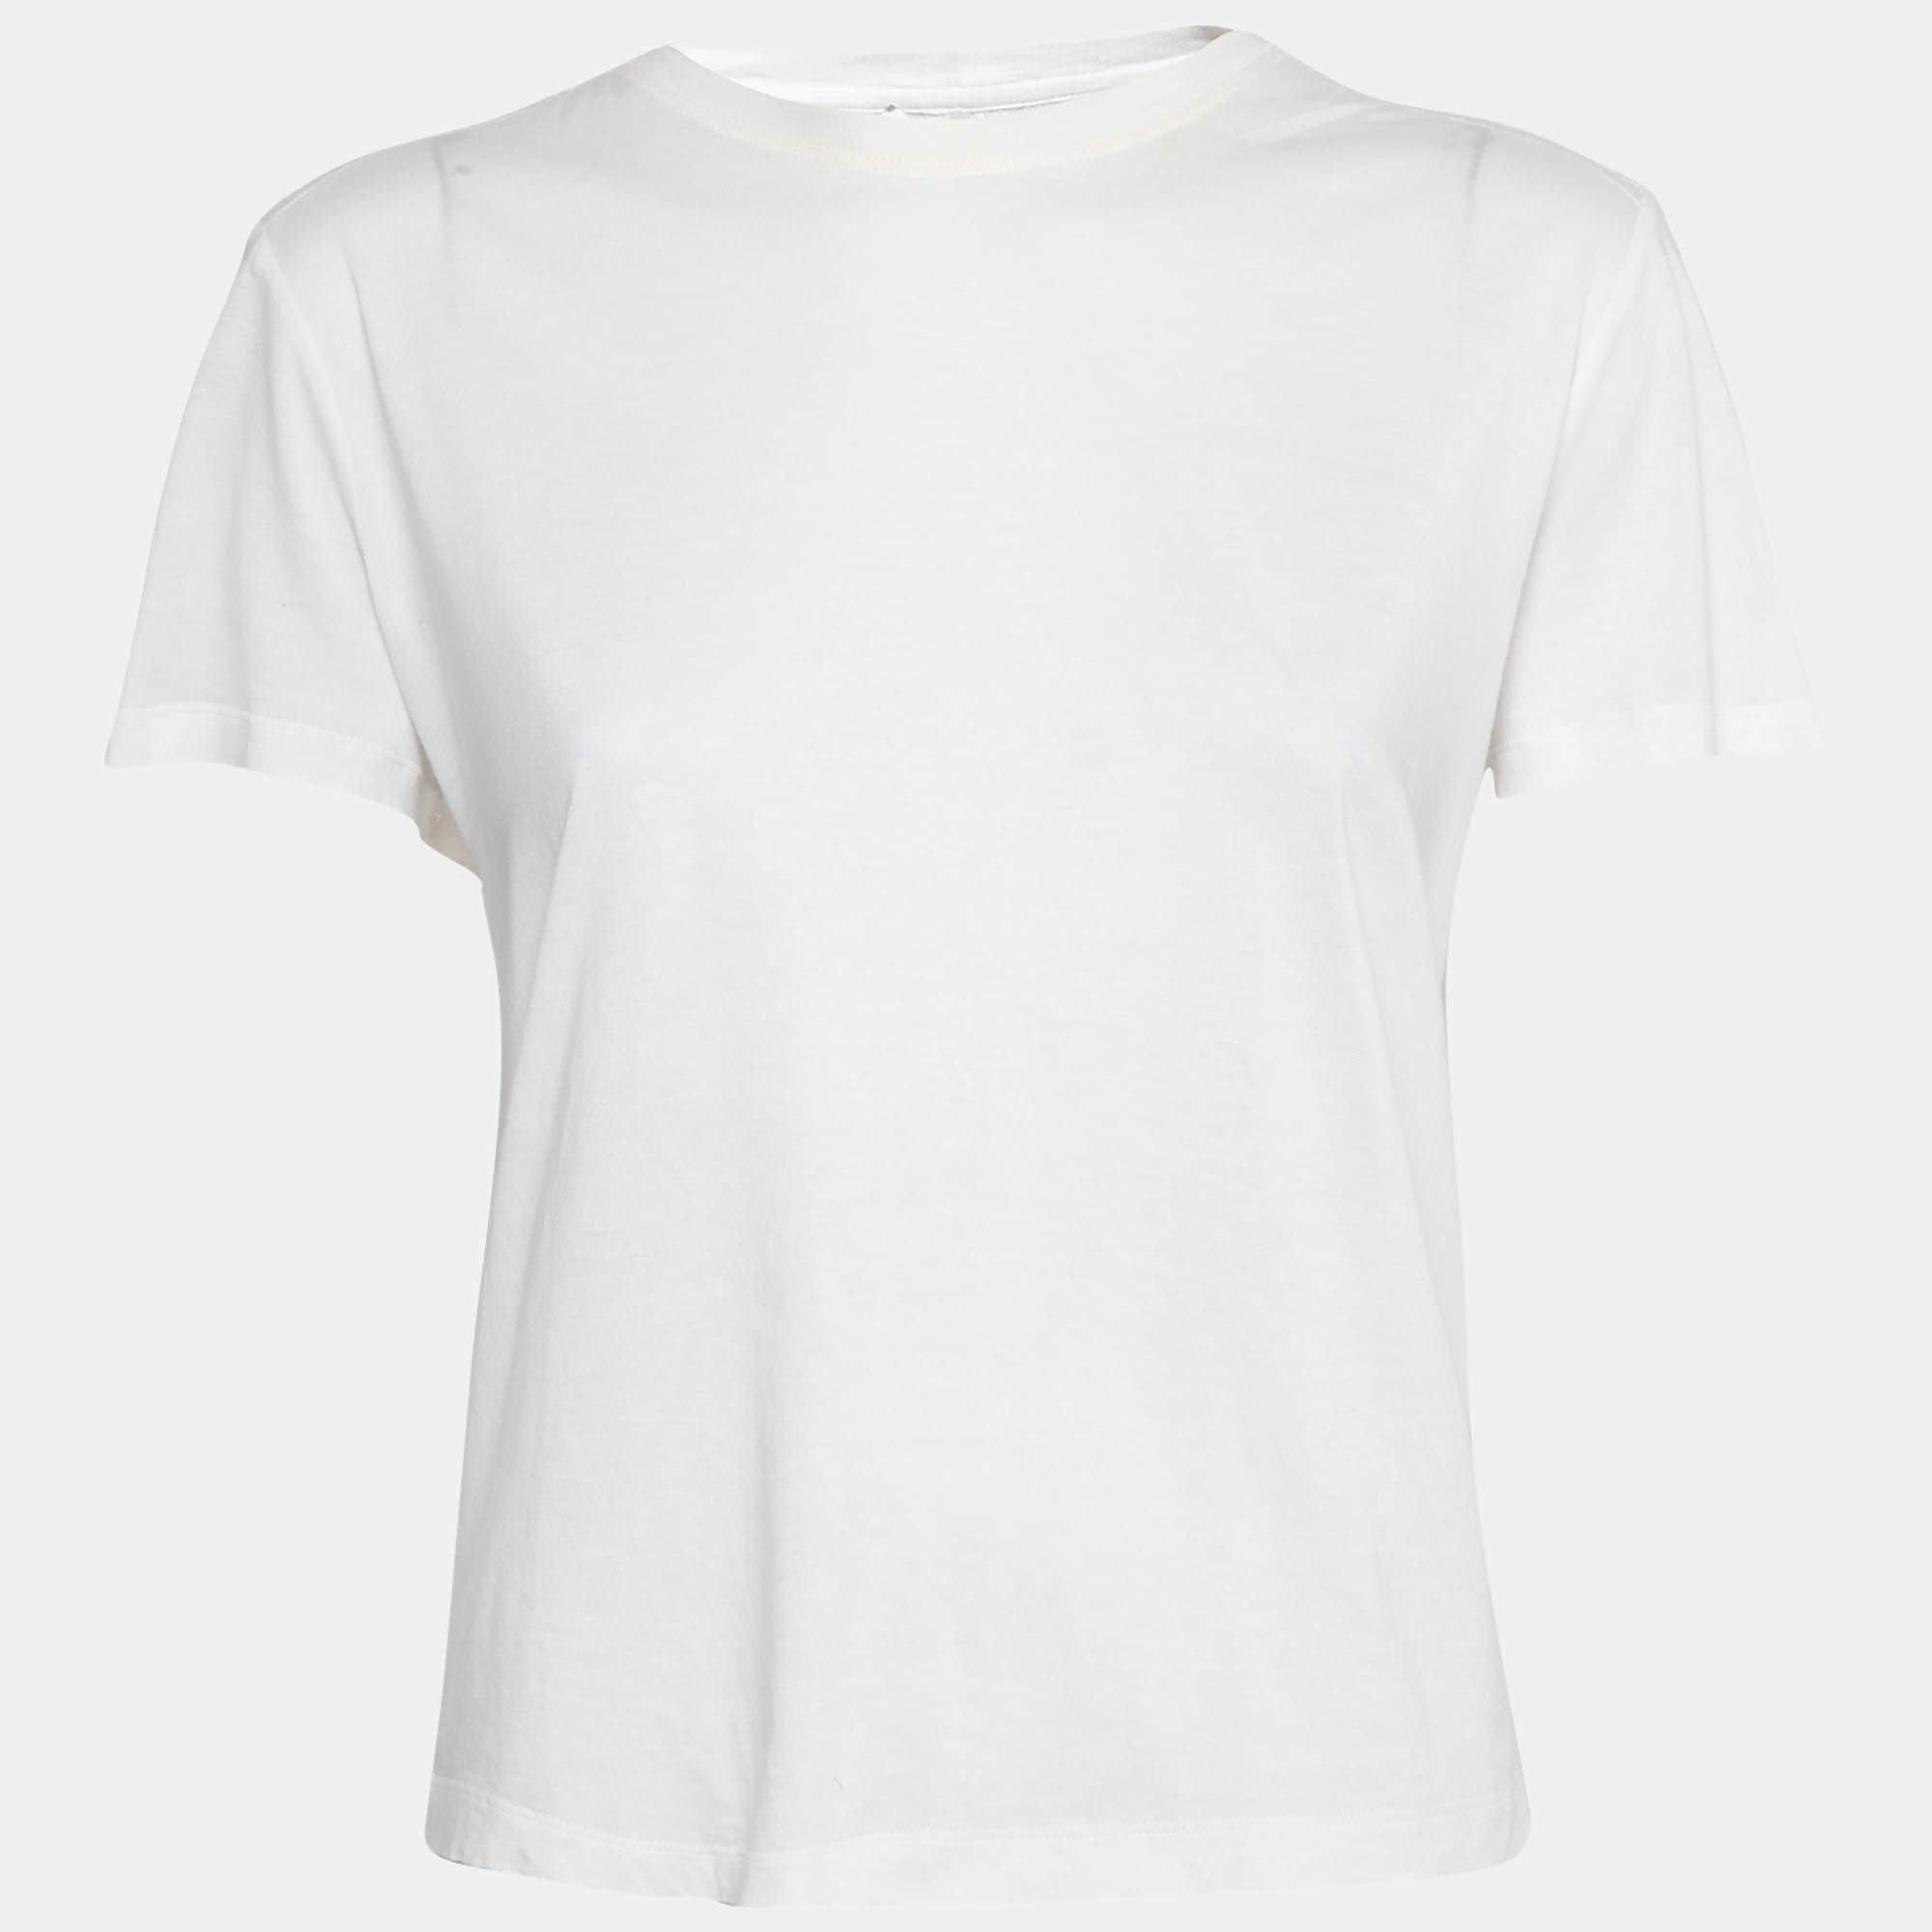 Valentino Off White Cotton & Lace Paneled Short Sleeve T-Shirt S